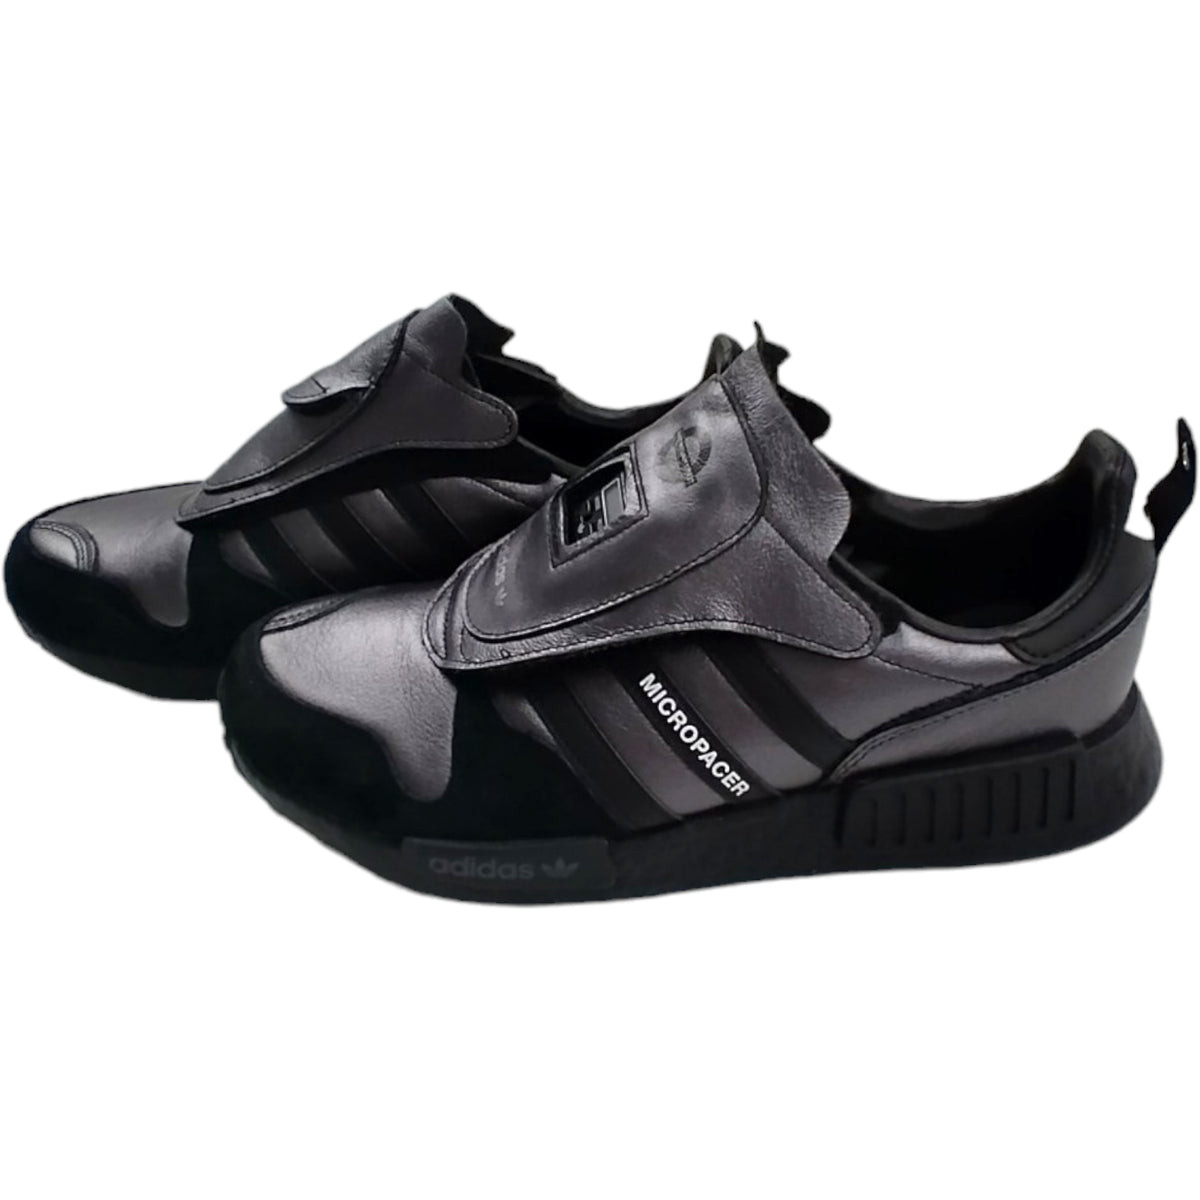 Adidas Micropacer Stealth Black/Black/Graphite X R1